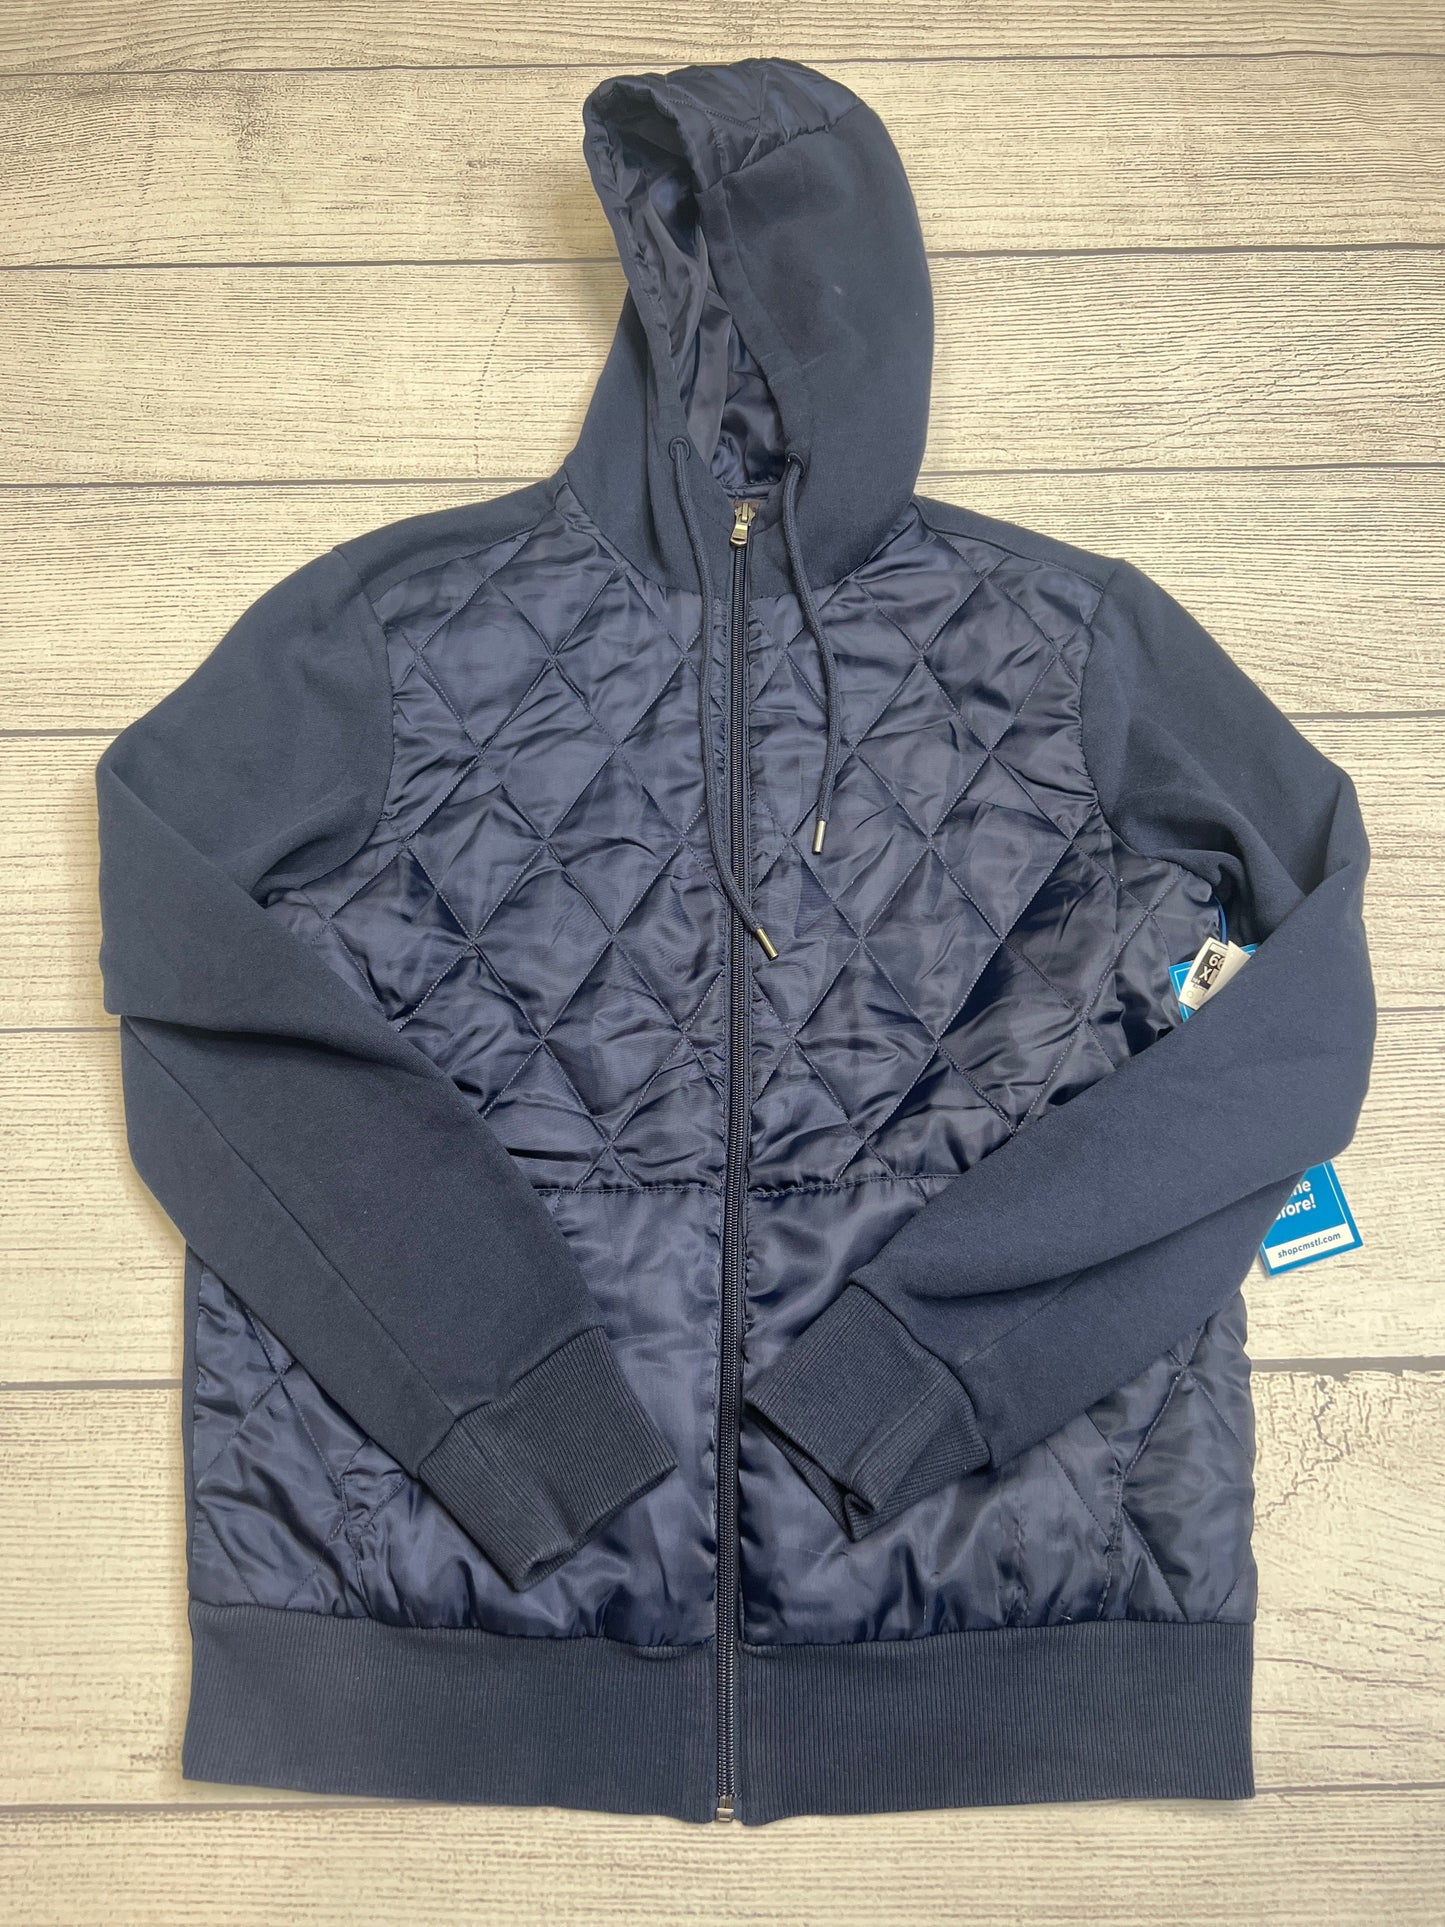 Coat / Jacket By Michael Kors  Size: M